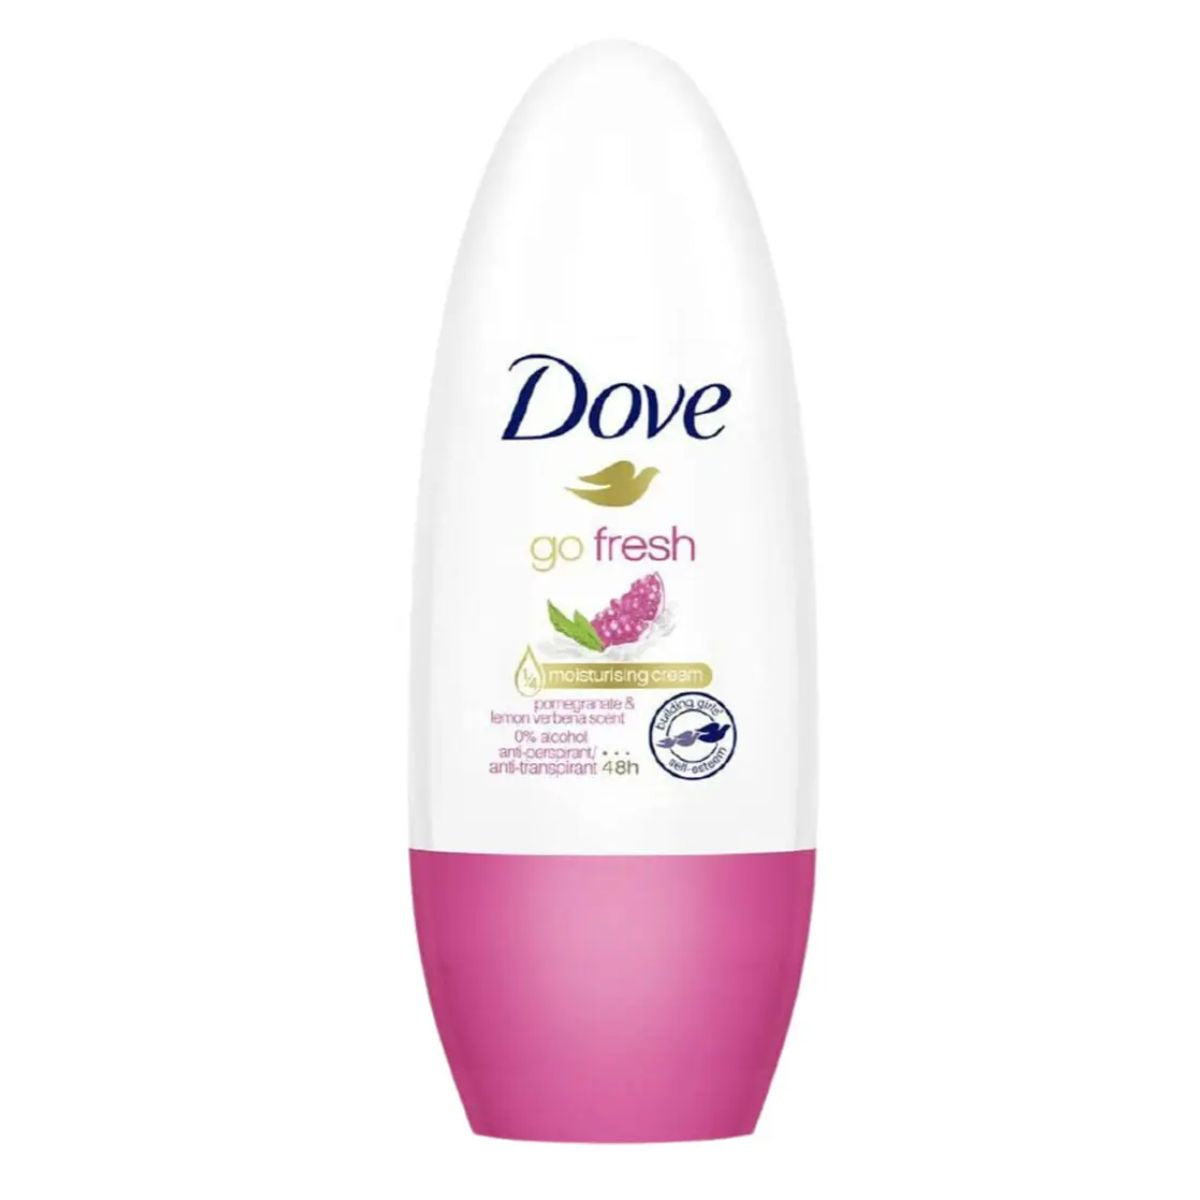 Dove Go Fresh Pomegranate Deodorant Anti-Perspirant Roll On - 50ml.